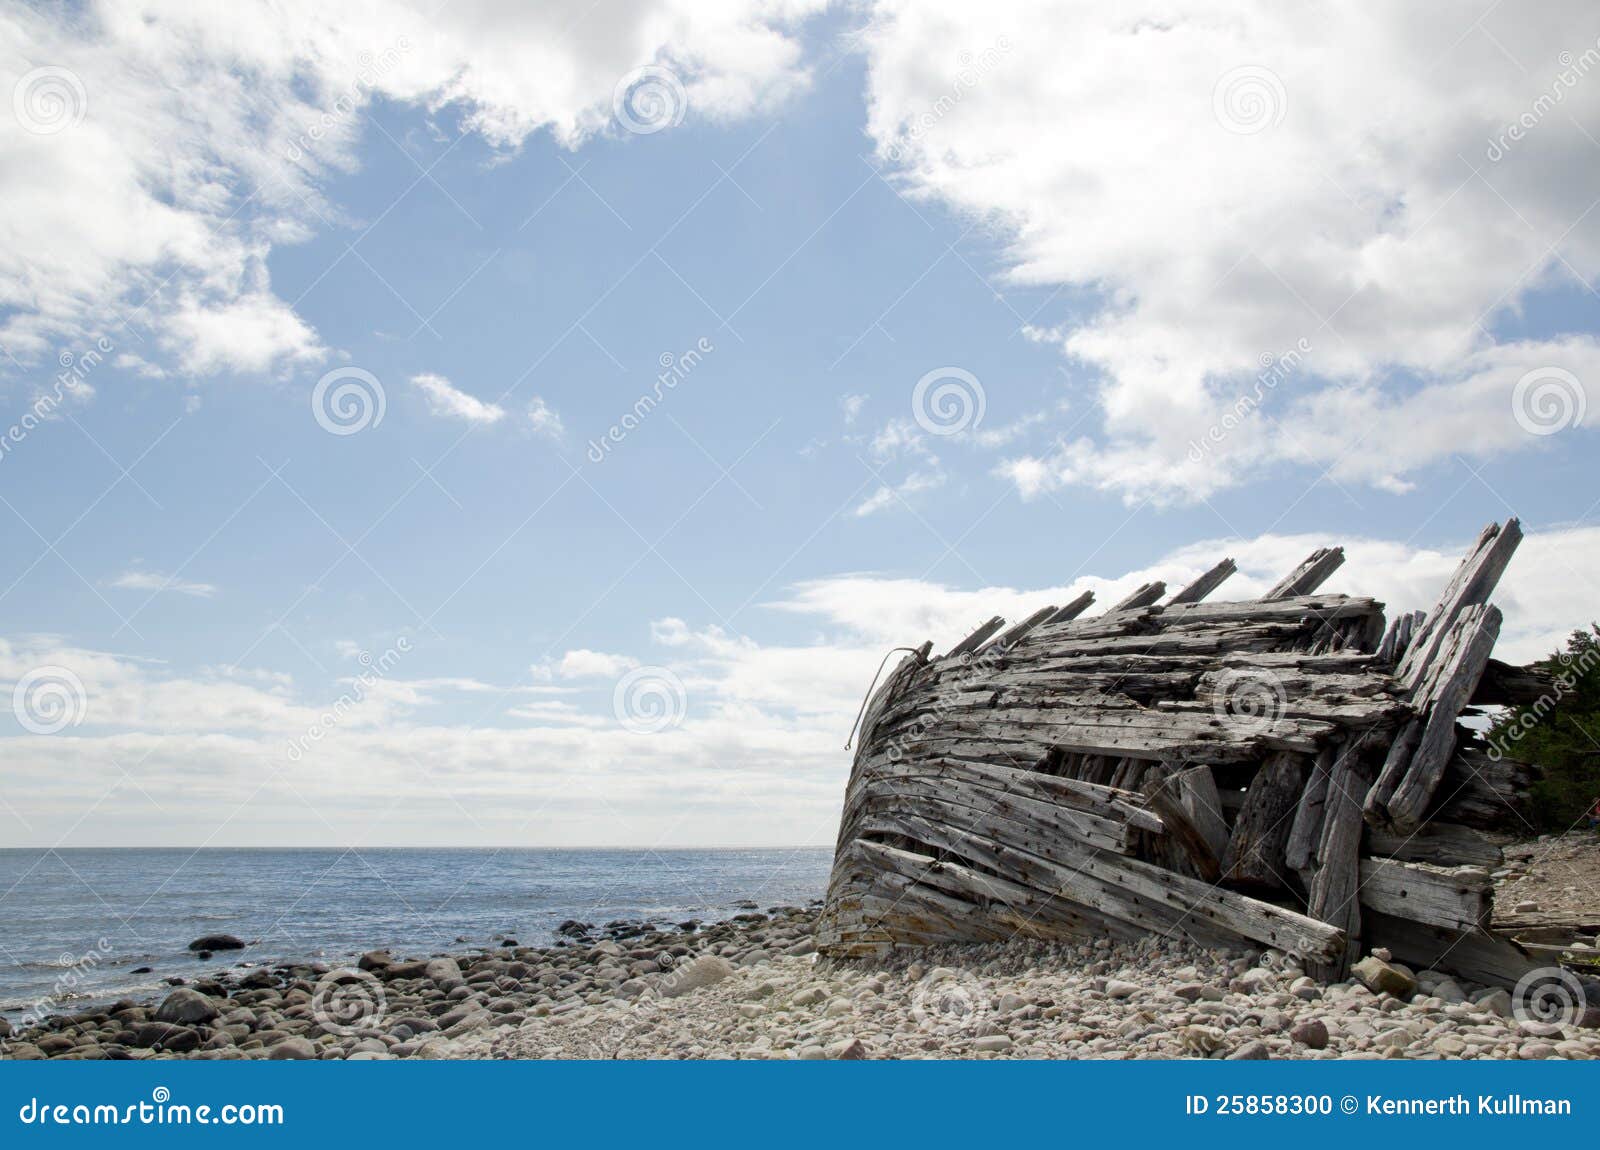 wooden shipwreck